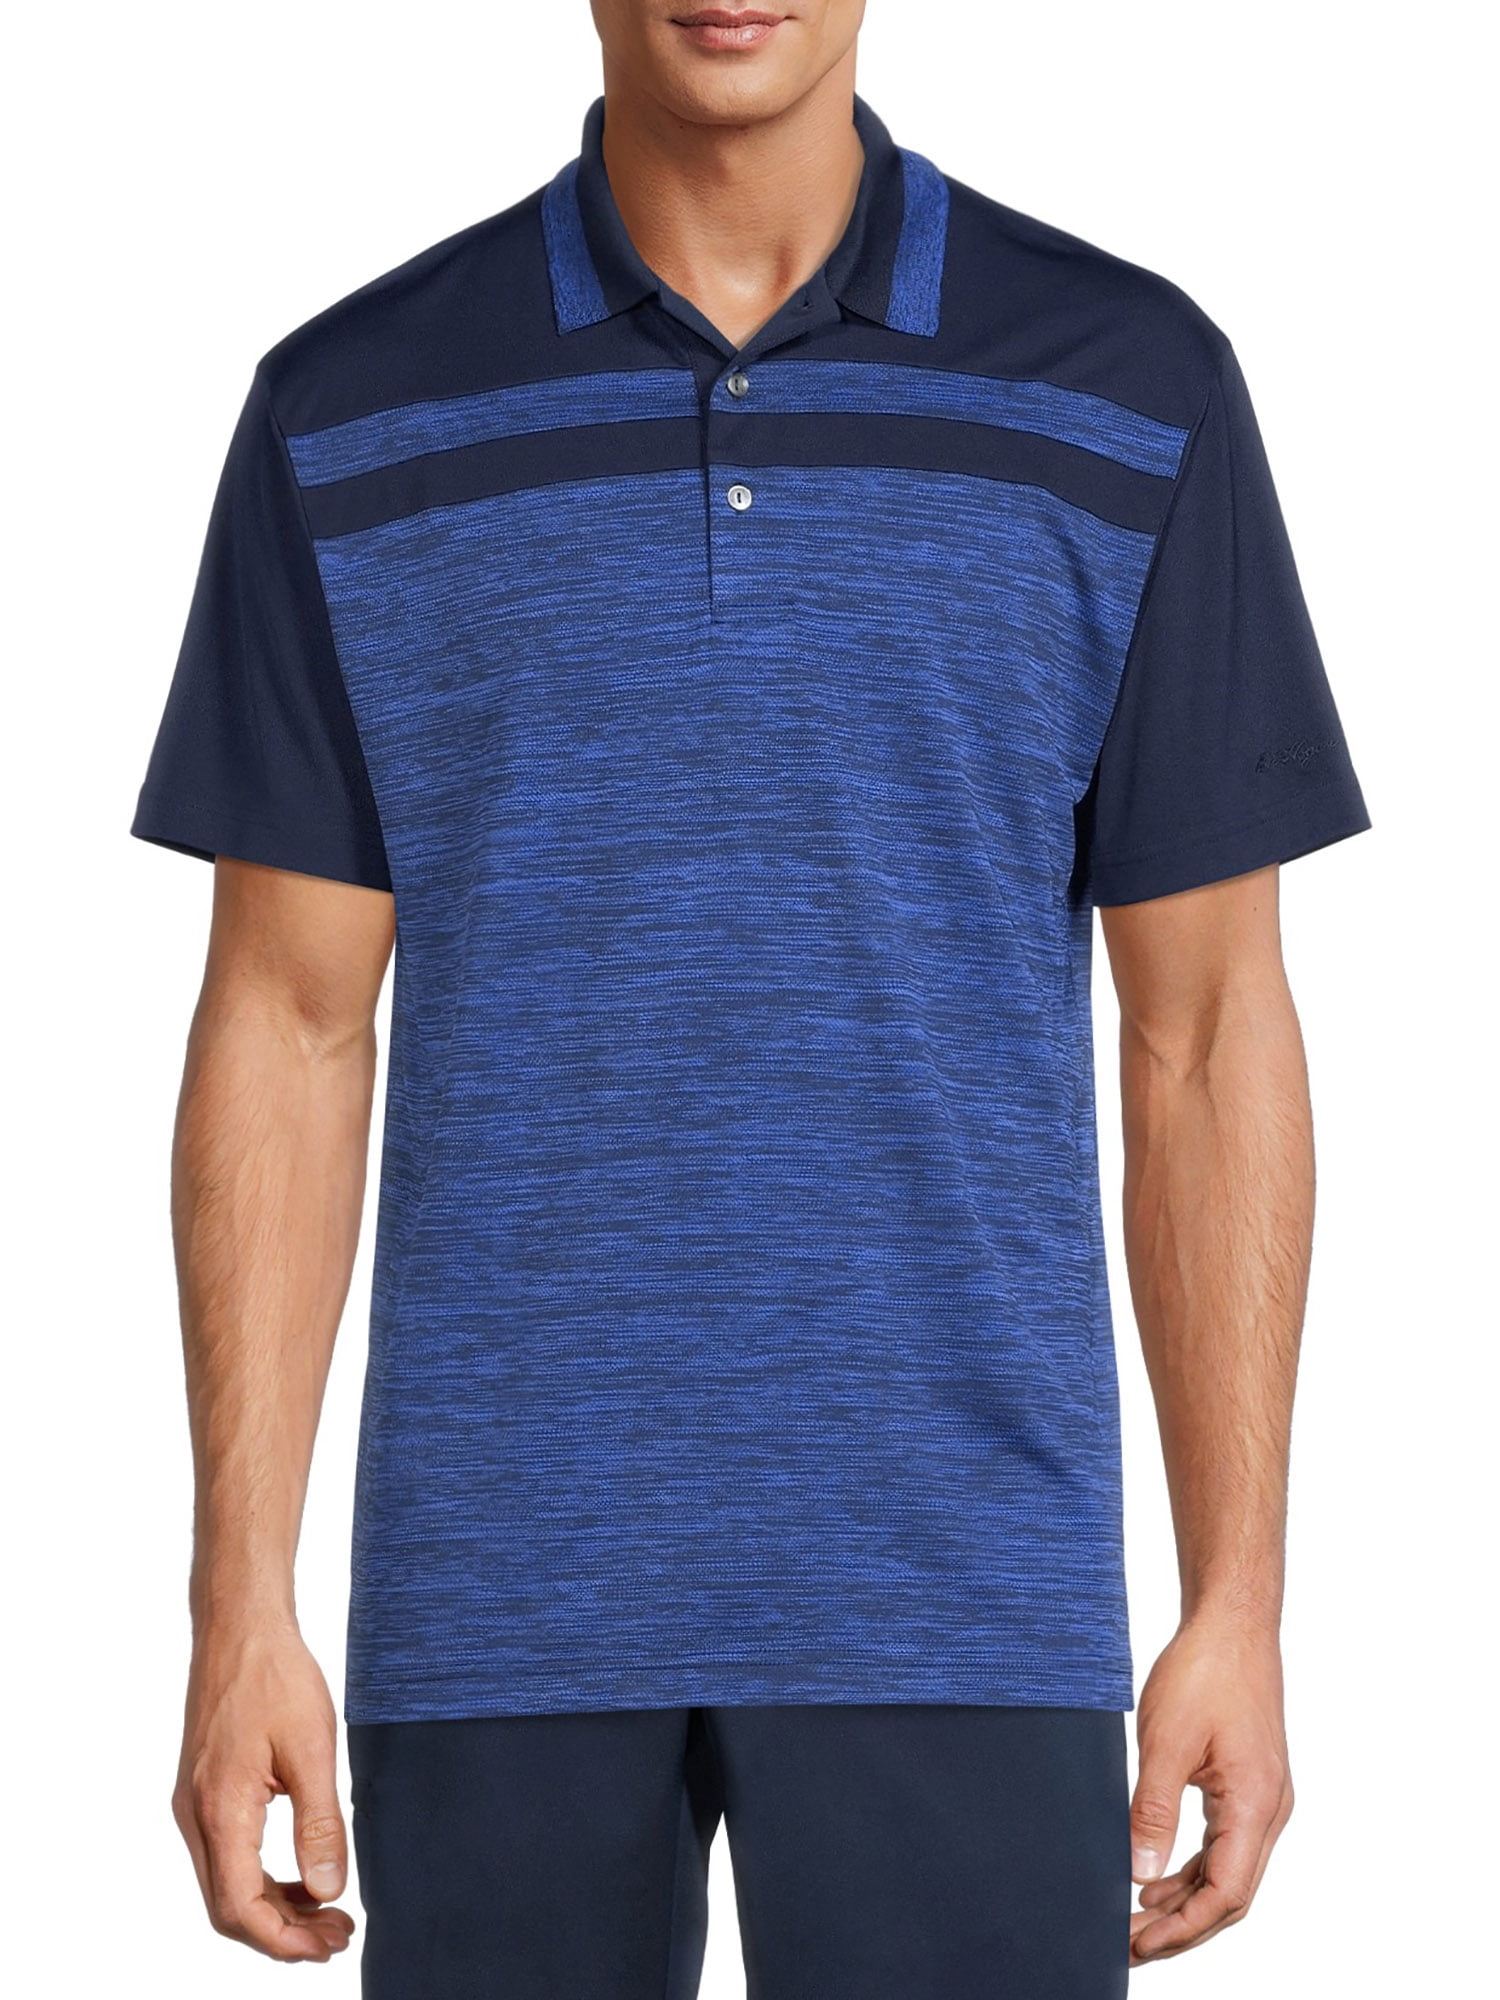 Ben Hogan Men's and Big Men's Performance Colorblocked Golf Polo Shirt ...